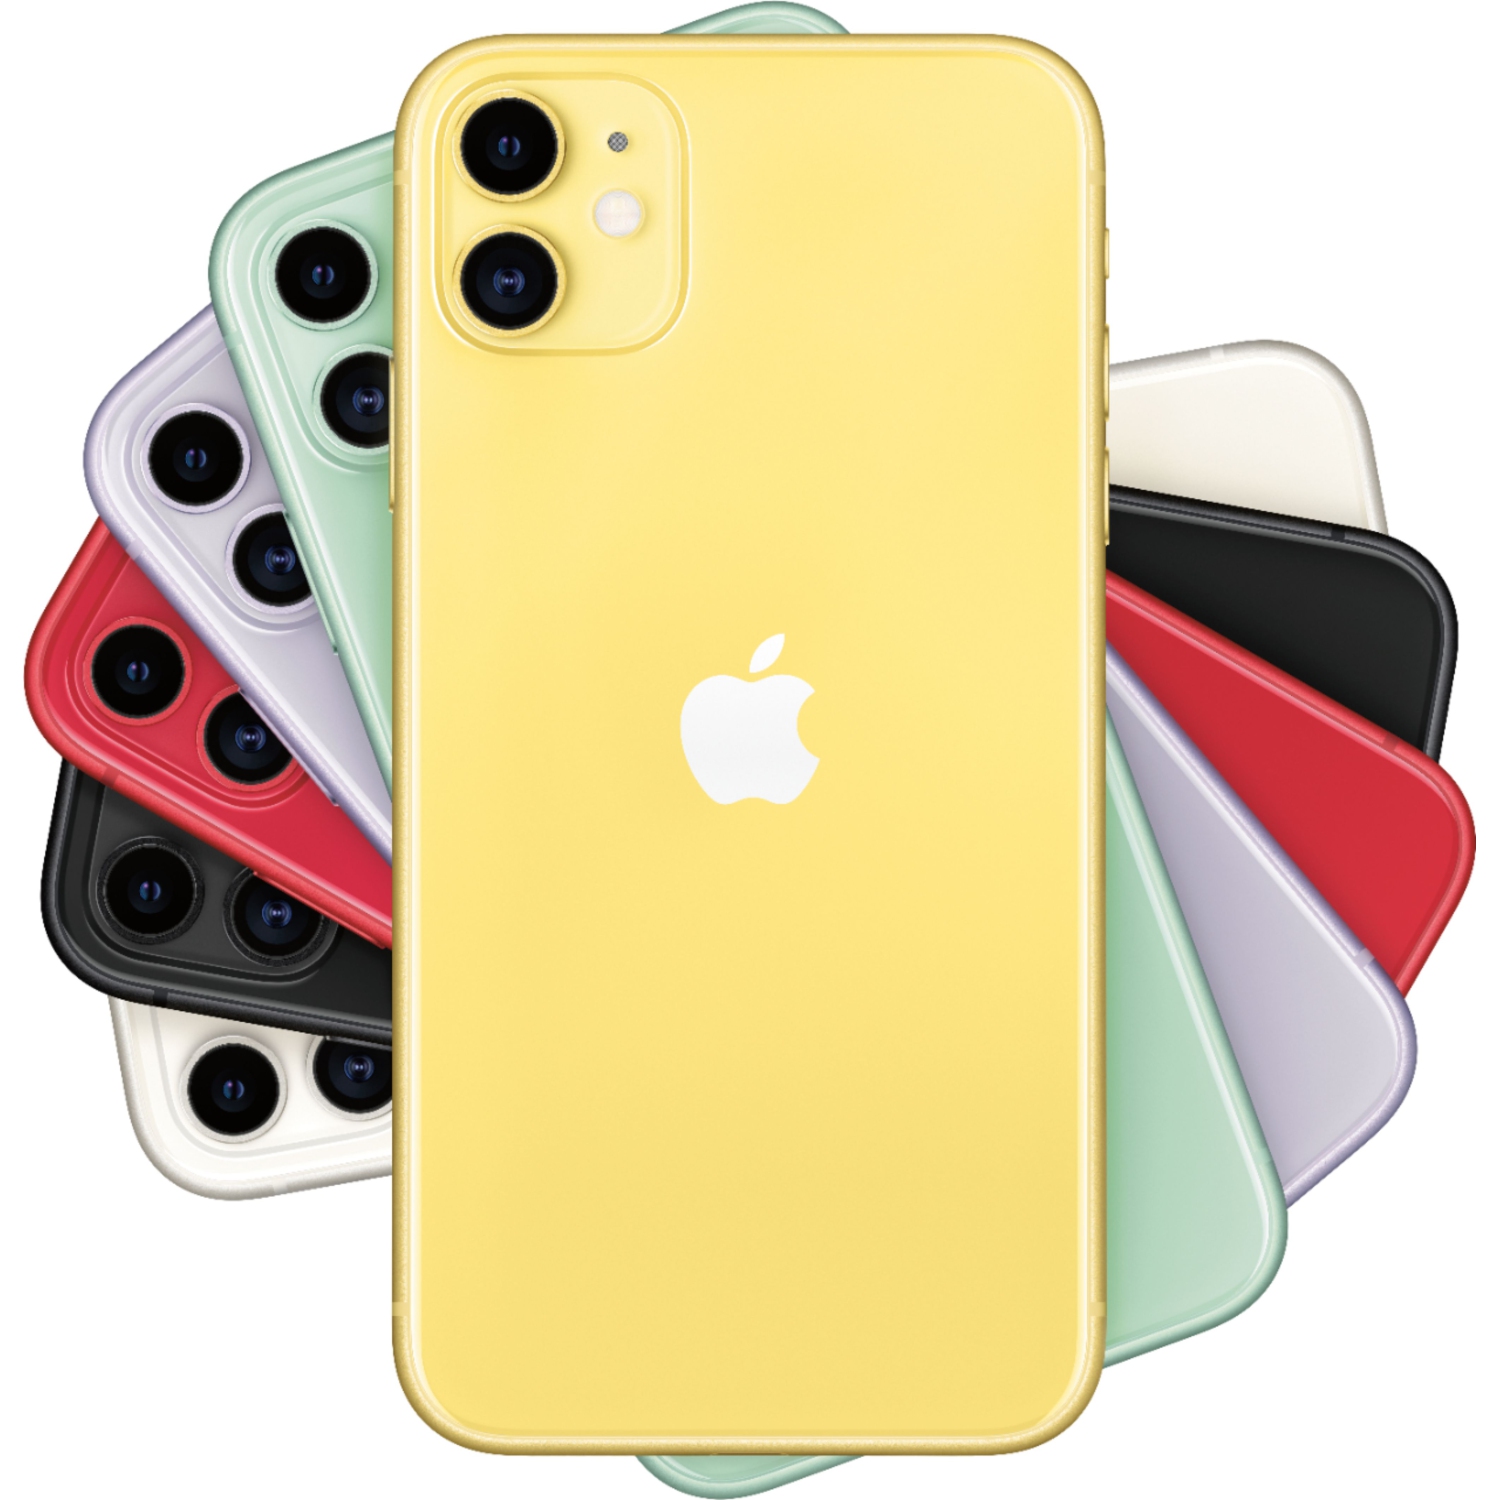 Refurbished (Good) - Apple iPhone 11 64GB Smartphone - Yellow